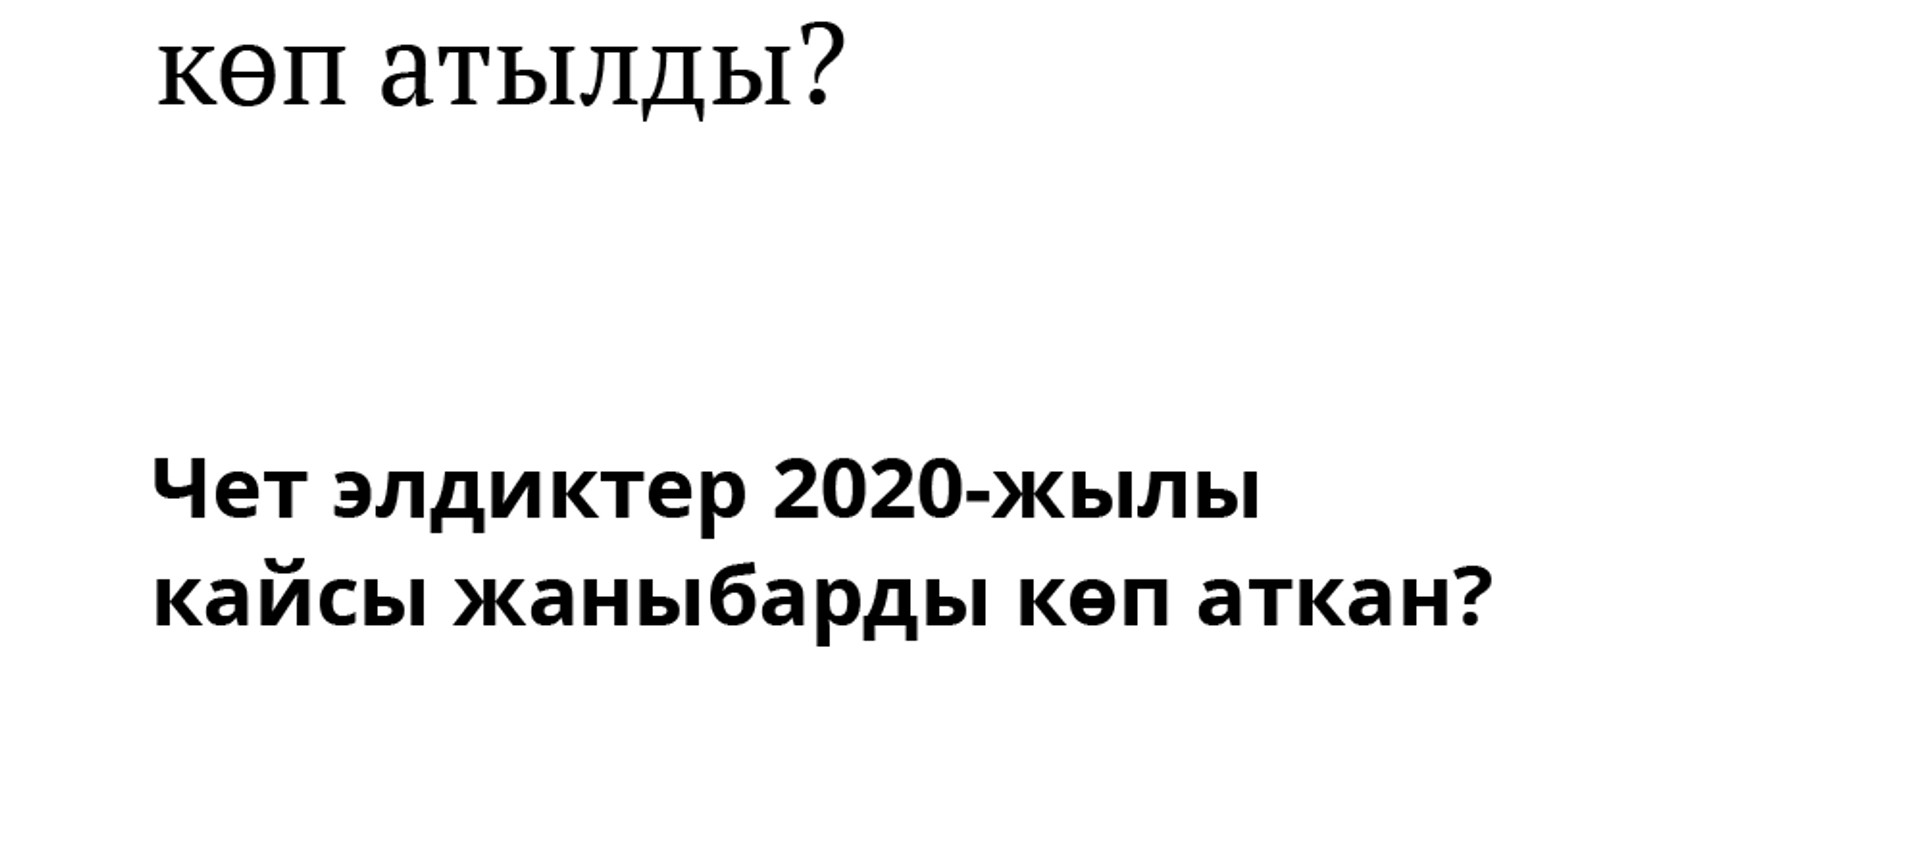 Кыргызстанда 2020-жылы кайсы жаныбарлар  көп атылды? - Sputnik Кыргызстан, 1920, 28.01.2021